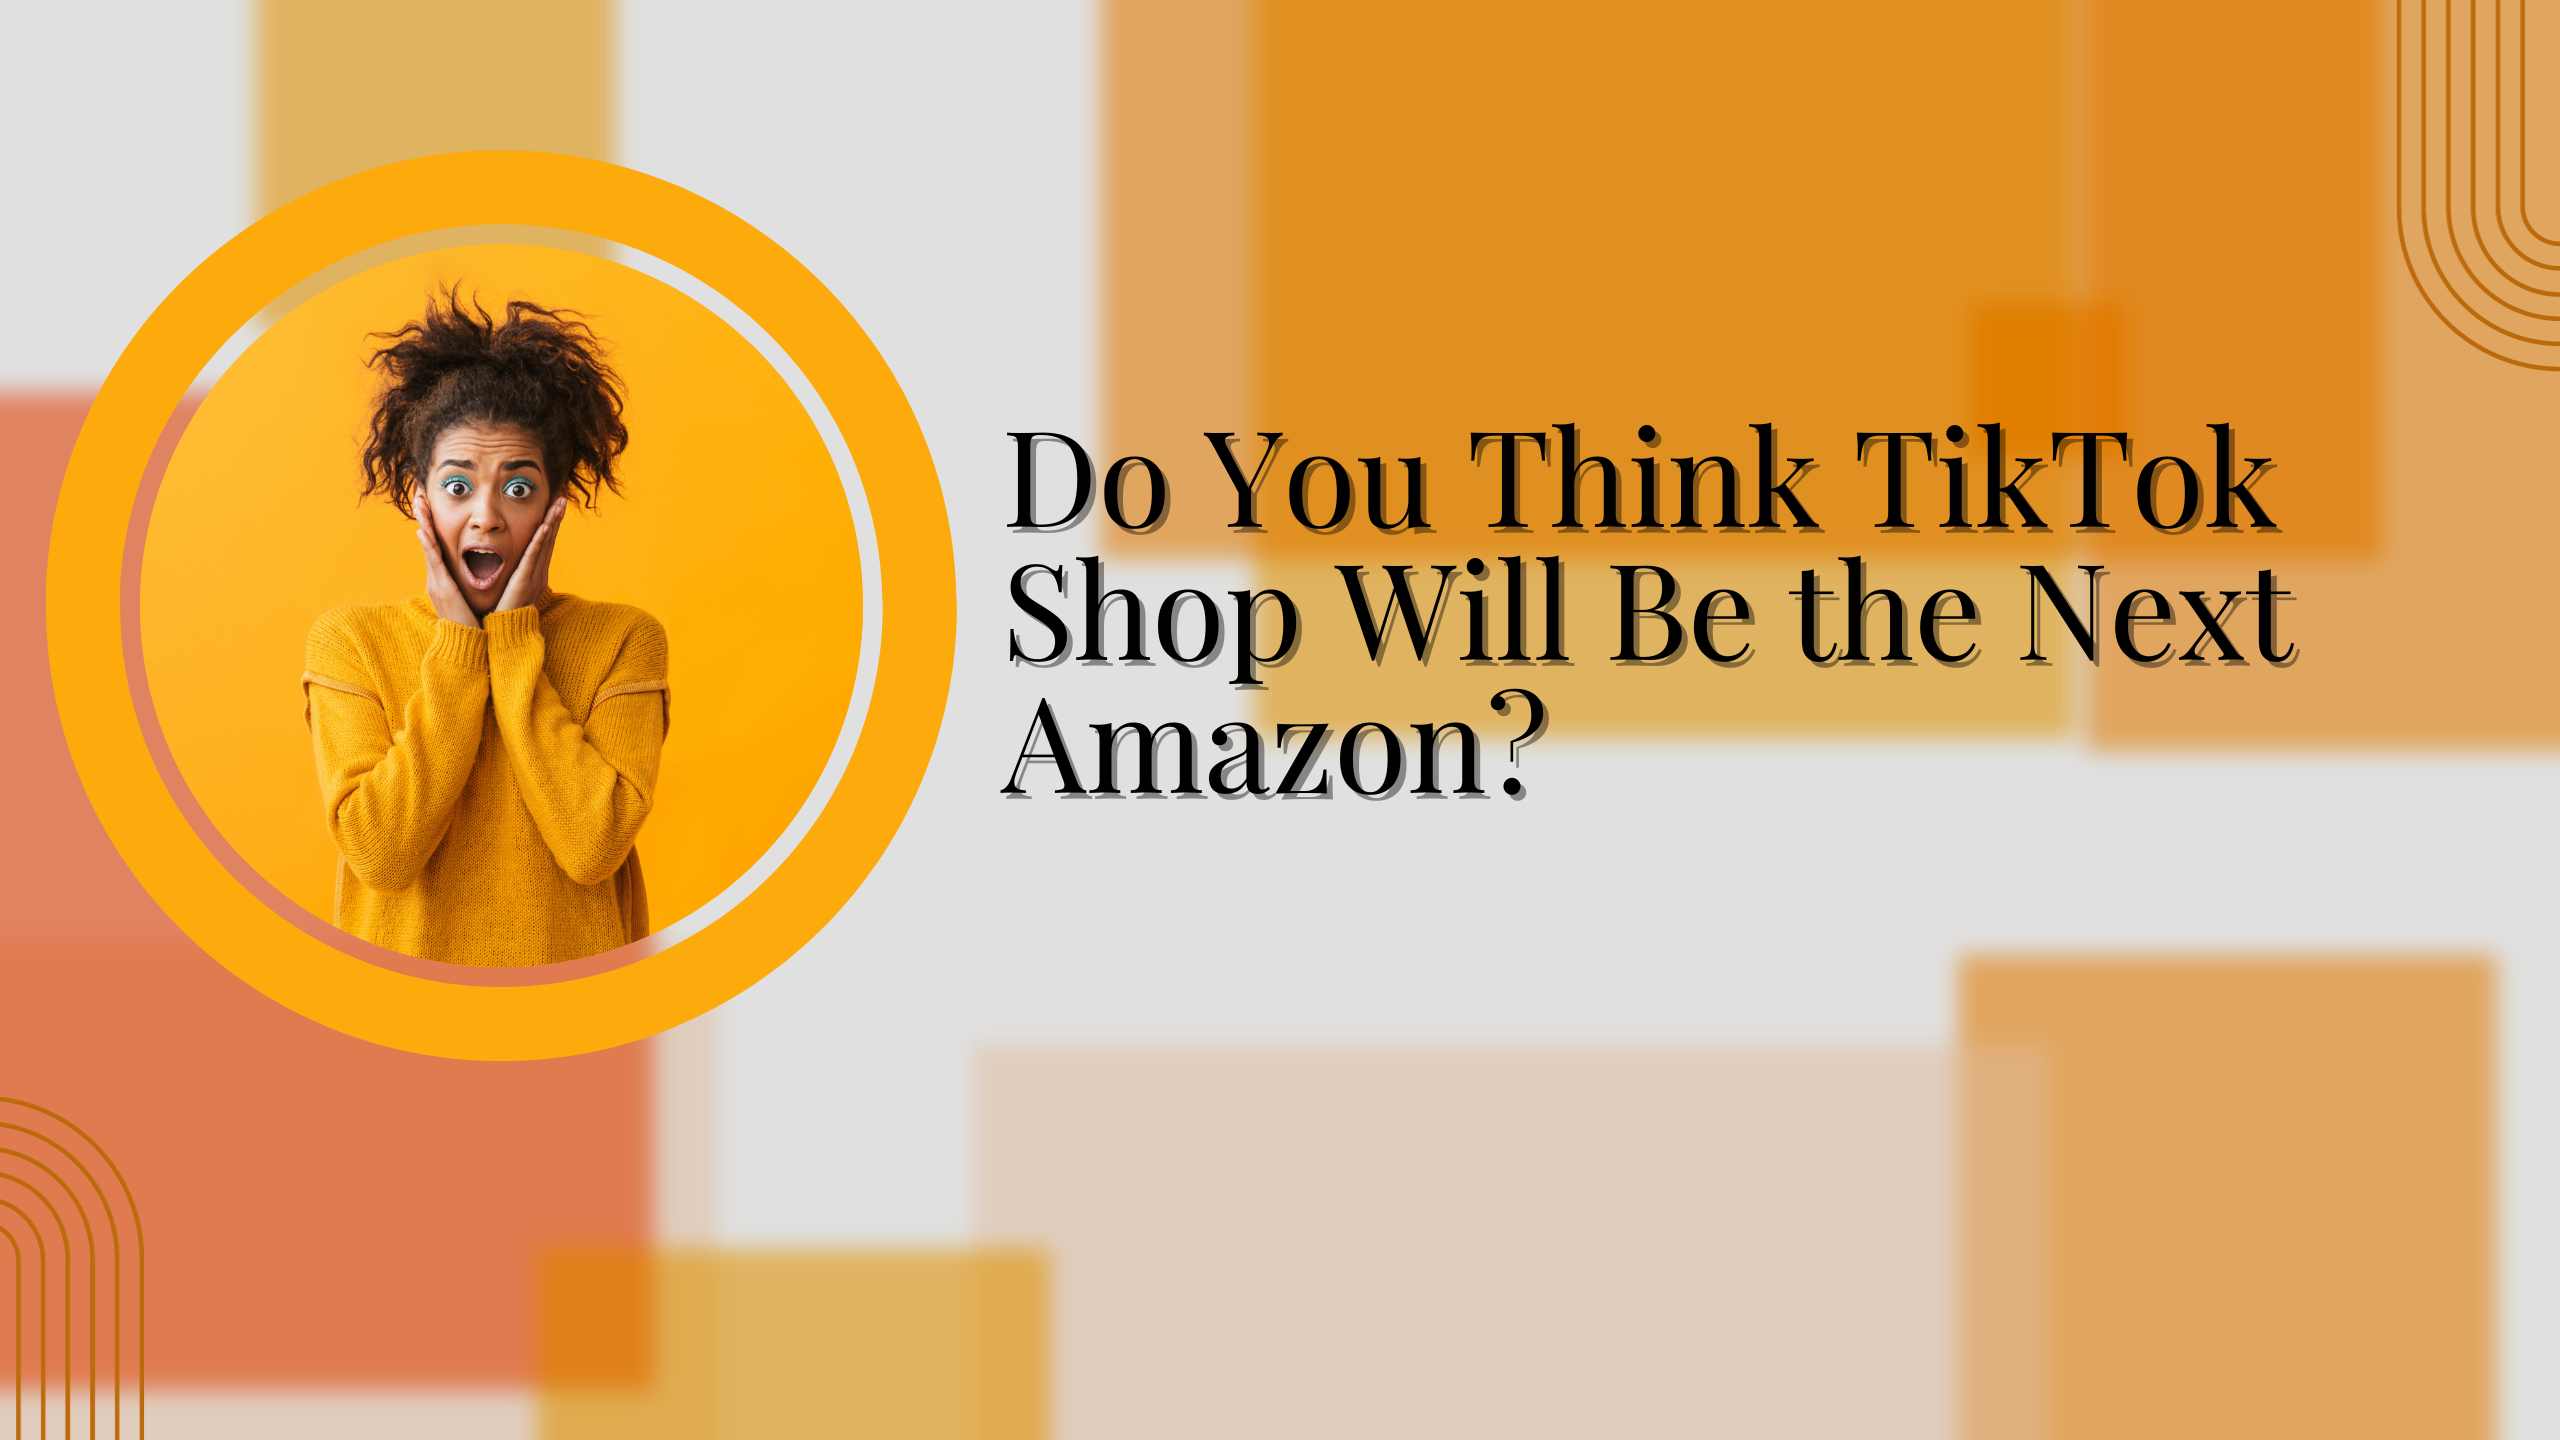 Do You Think TikTok Shop Will Be the Next Amazon?